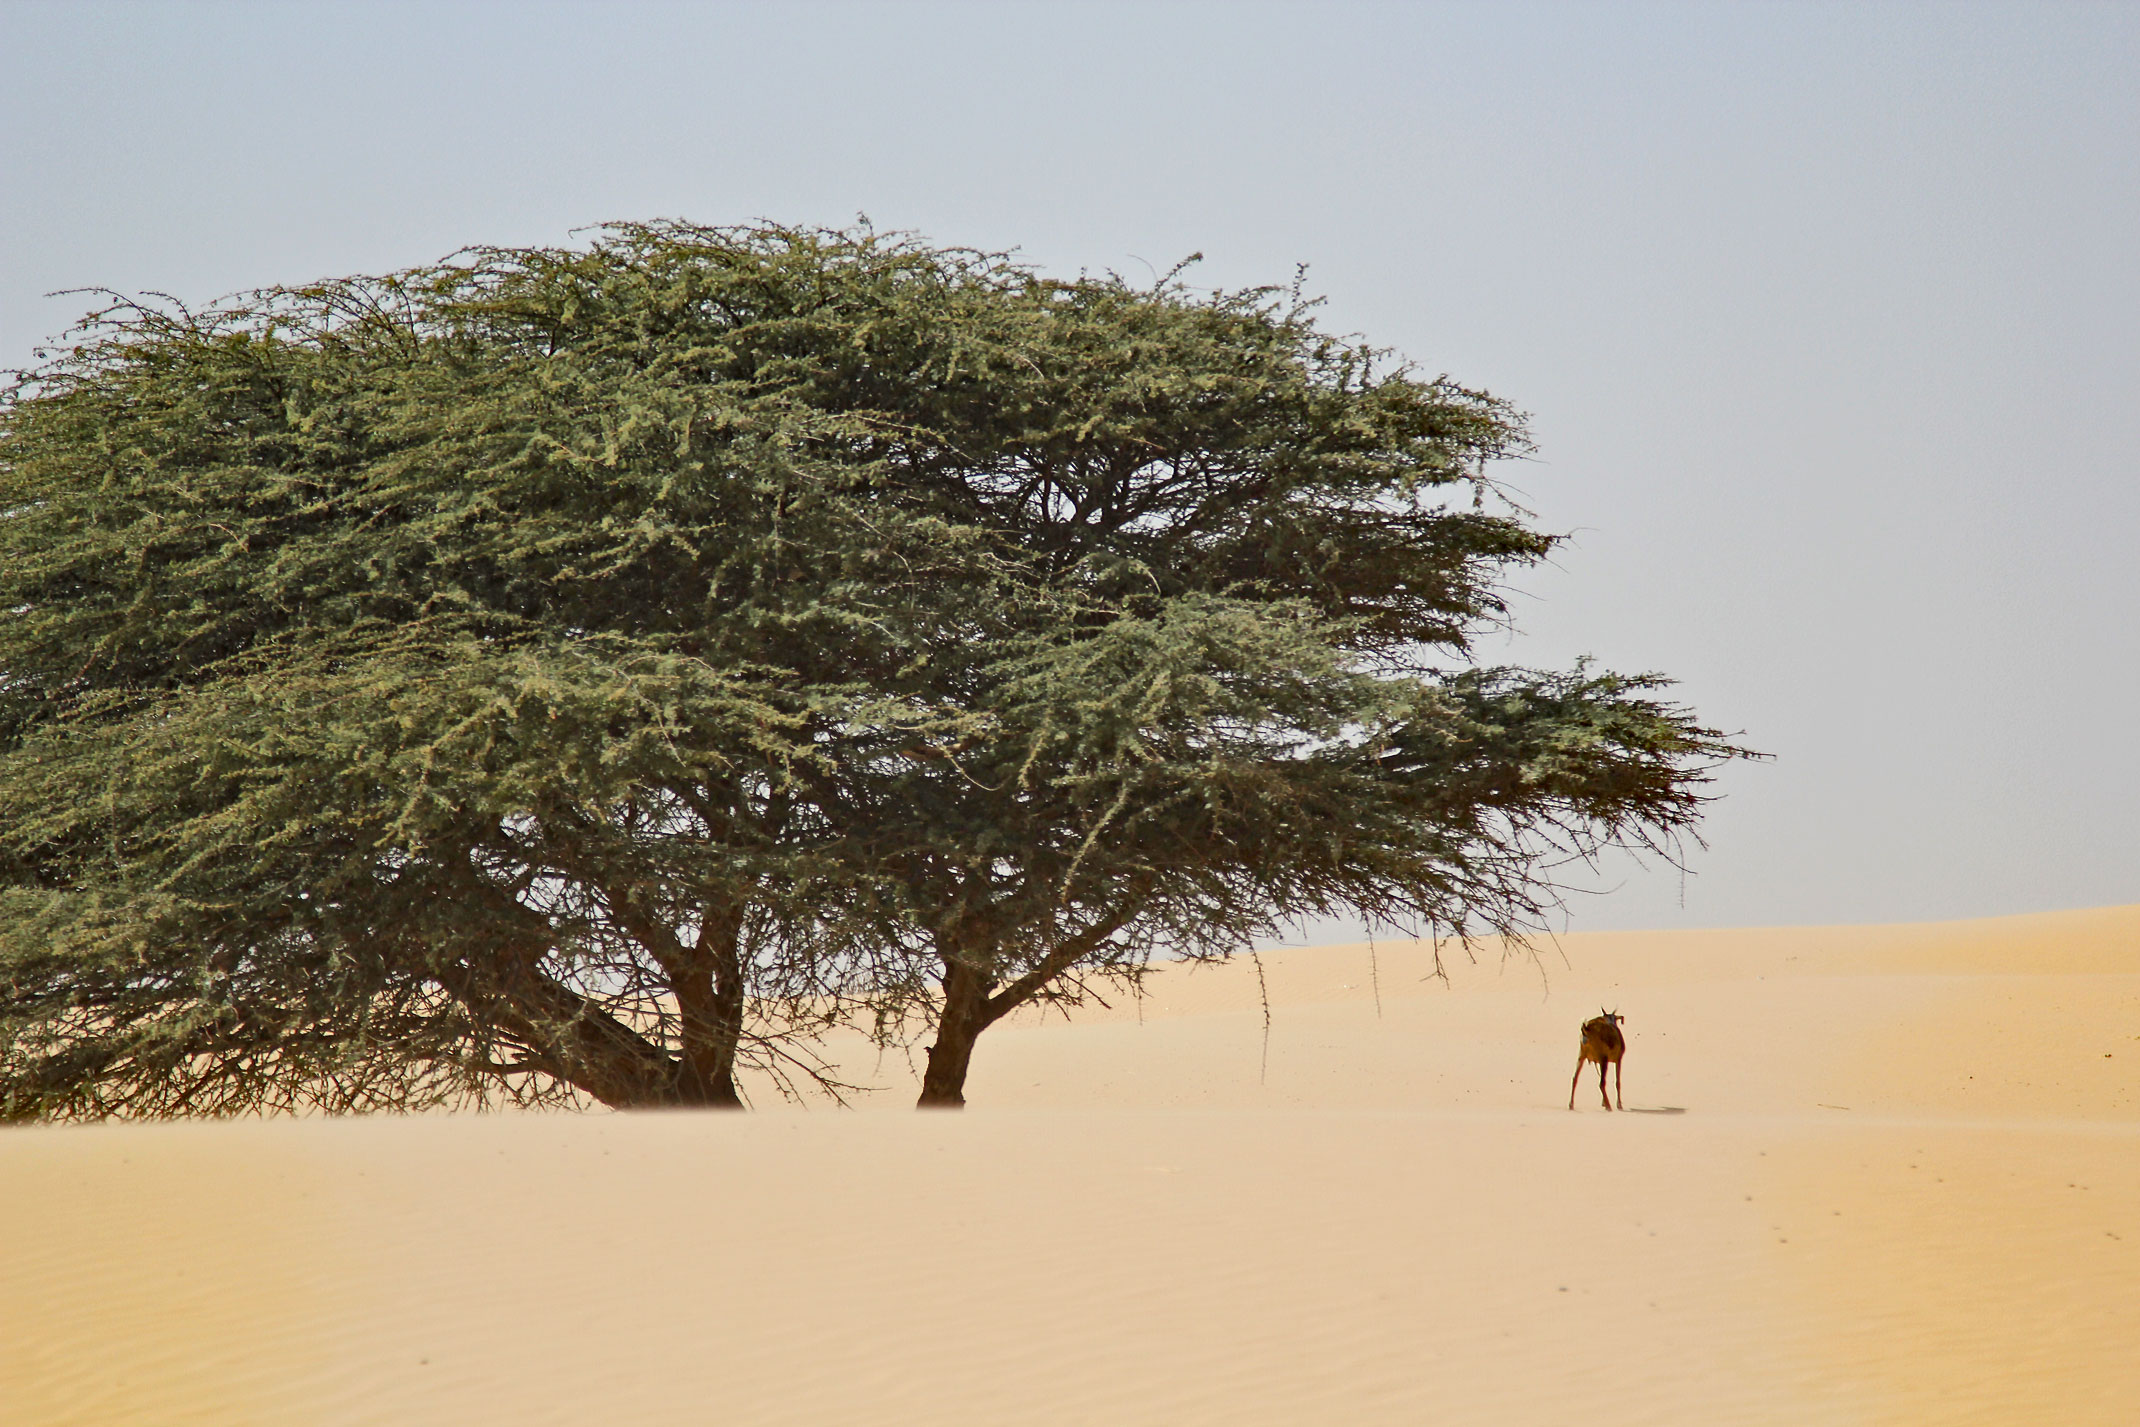 Mauretania.Pustynny piasek,drzewo i koza.